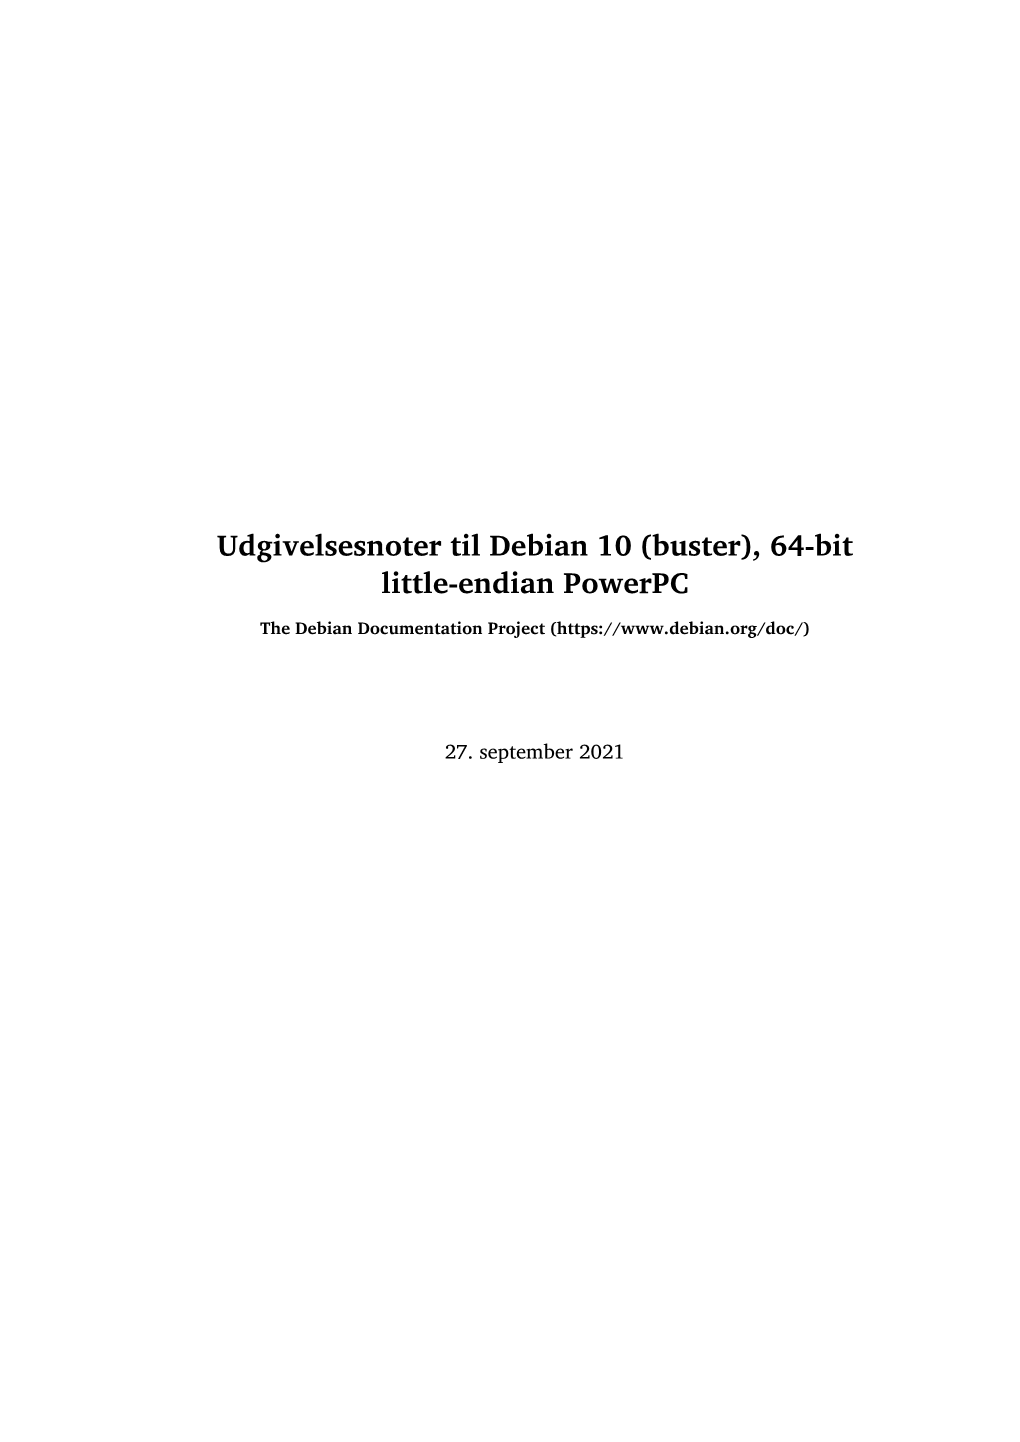 Udgivelsesnoter Til Debian 10 (Buster), 64-Bit Little-Endian Powerpc